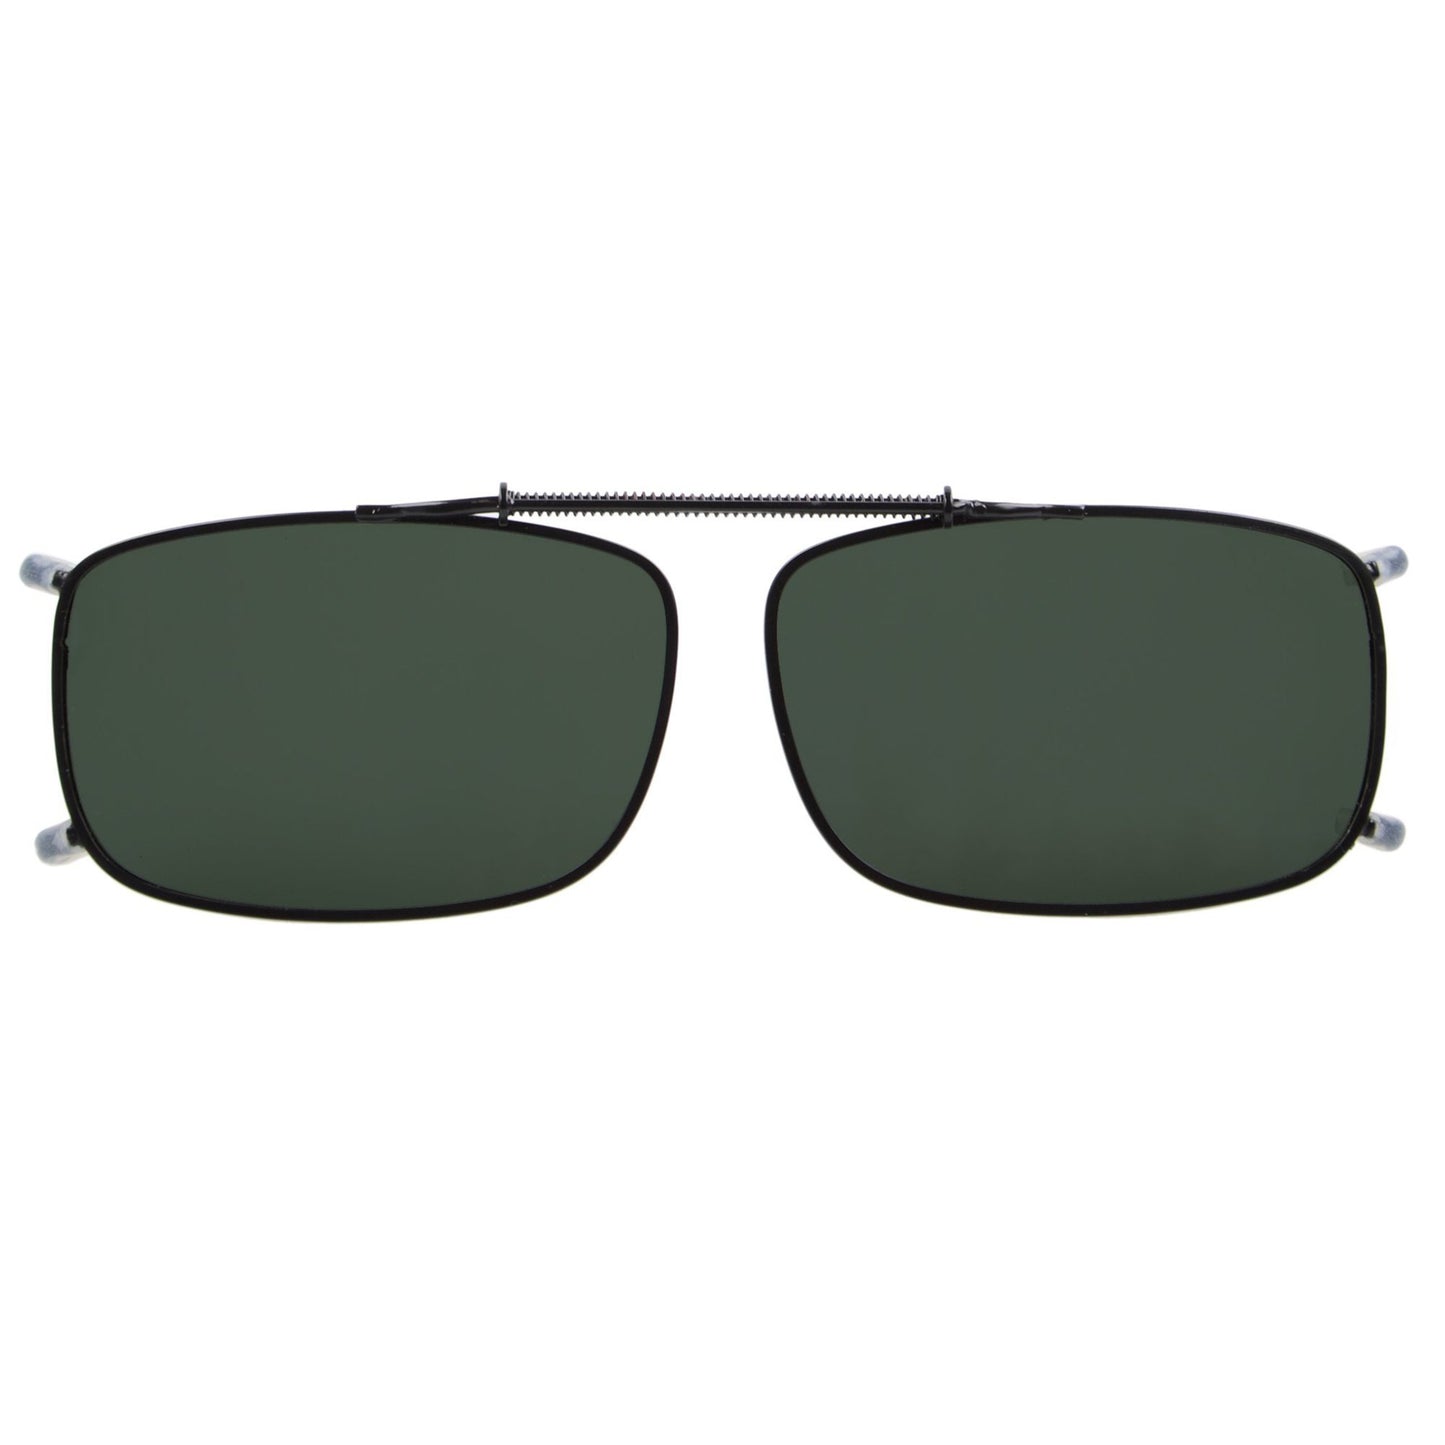 Sunglasses Clip On Polarized G15 C63